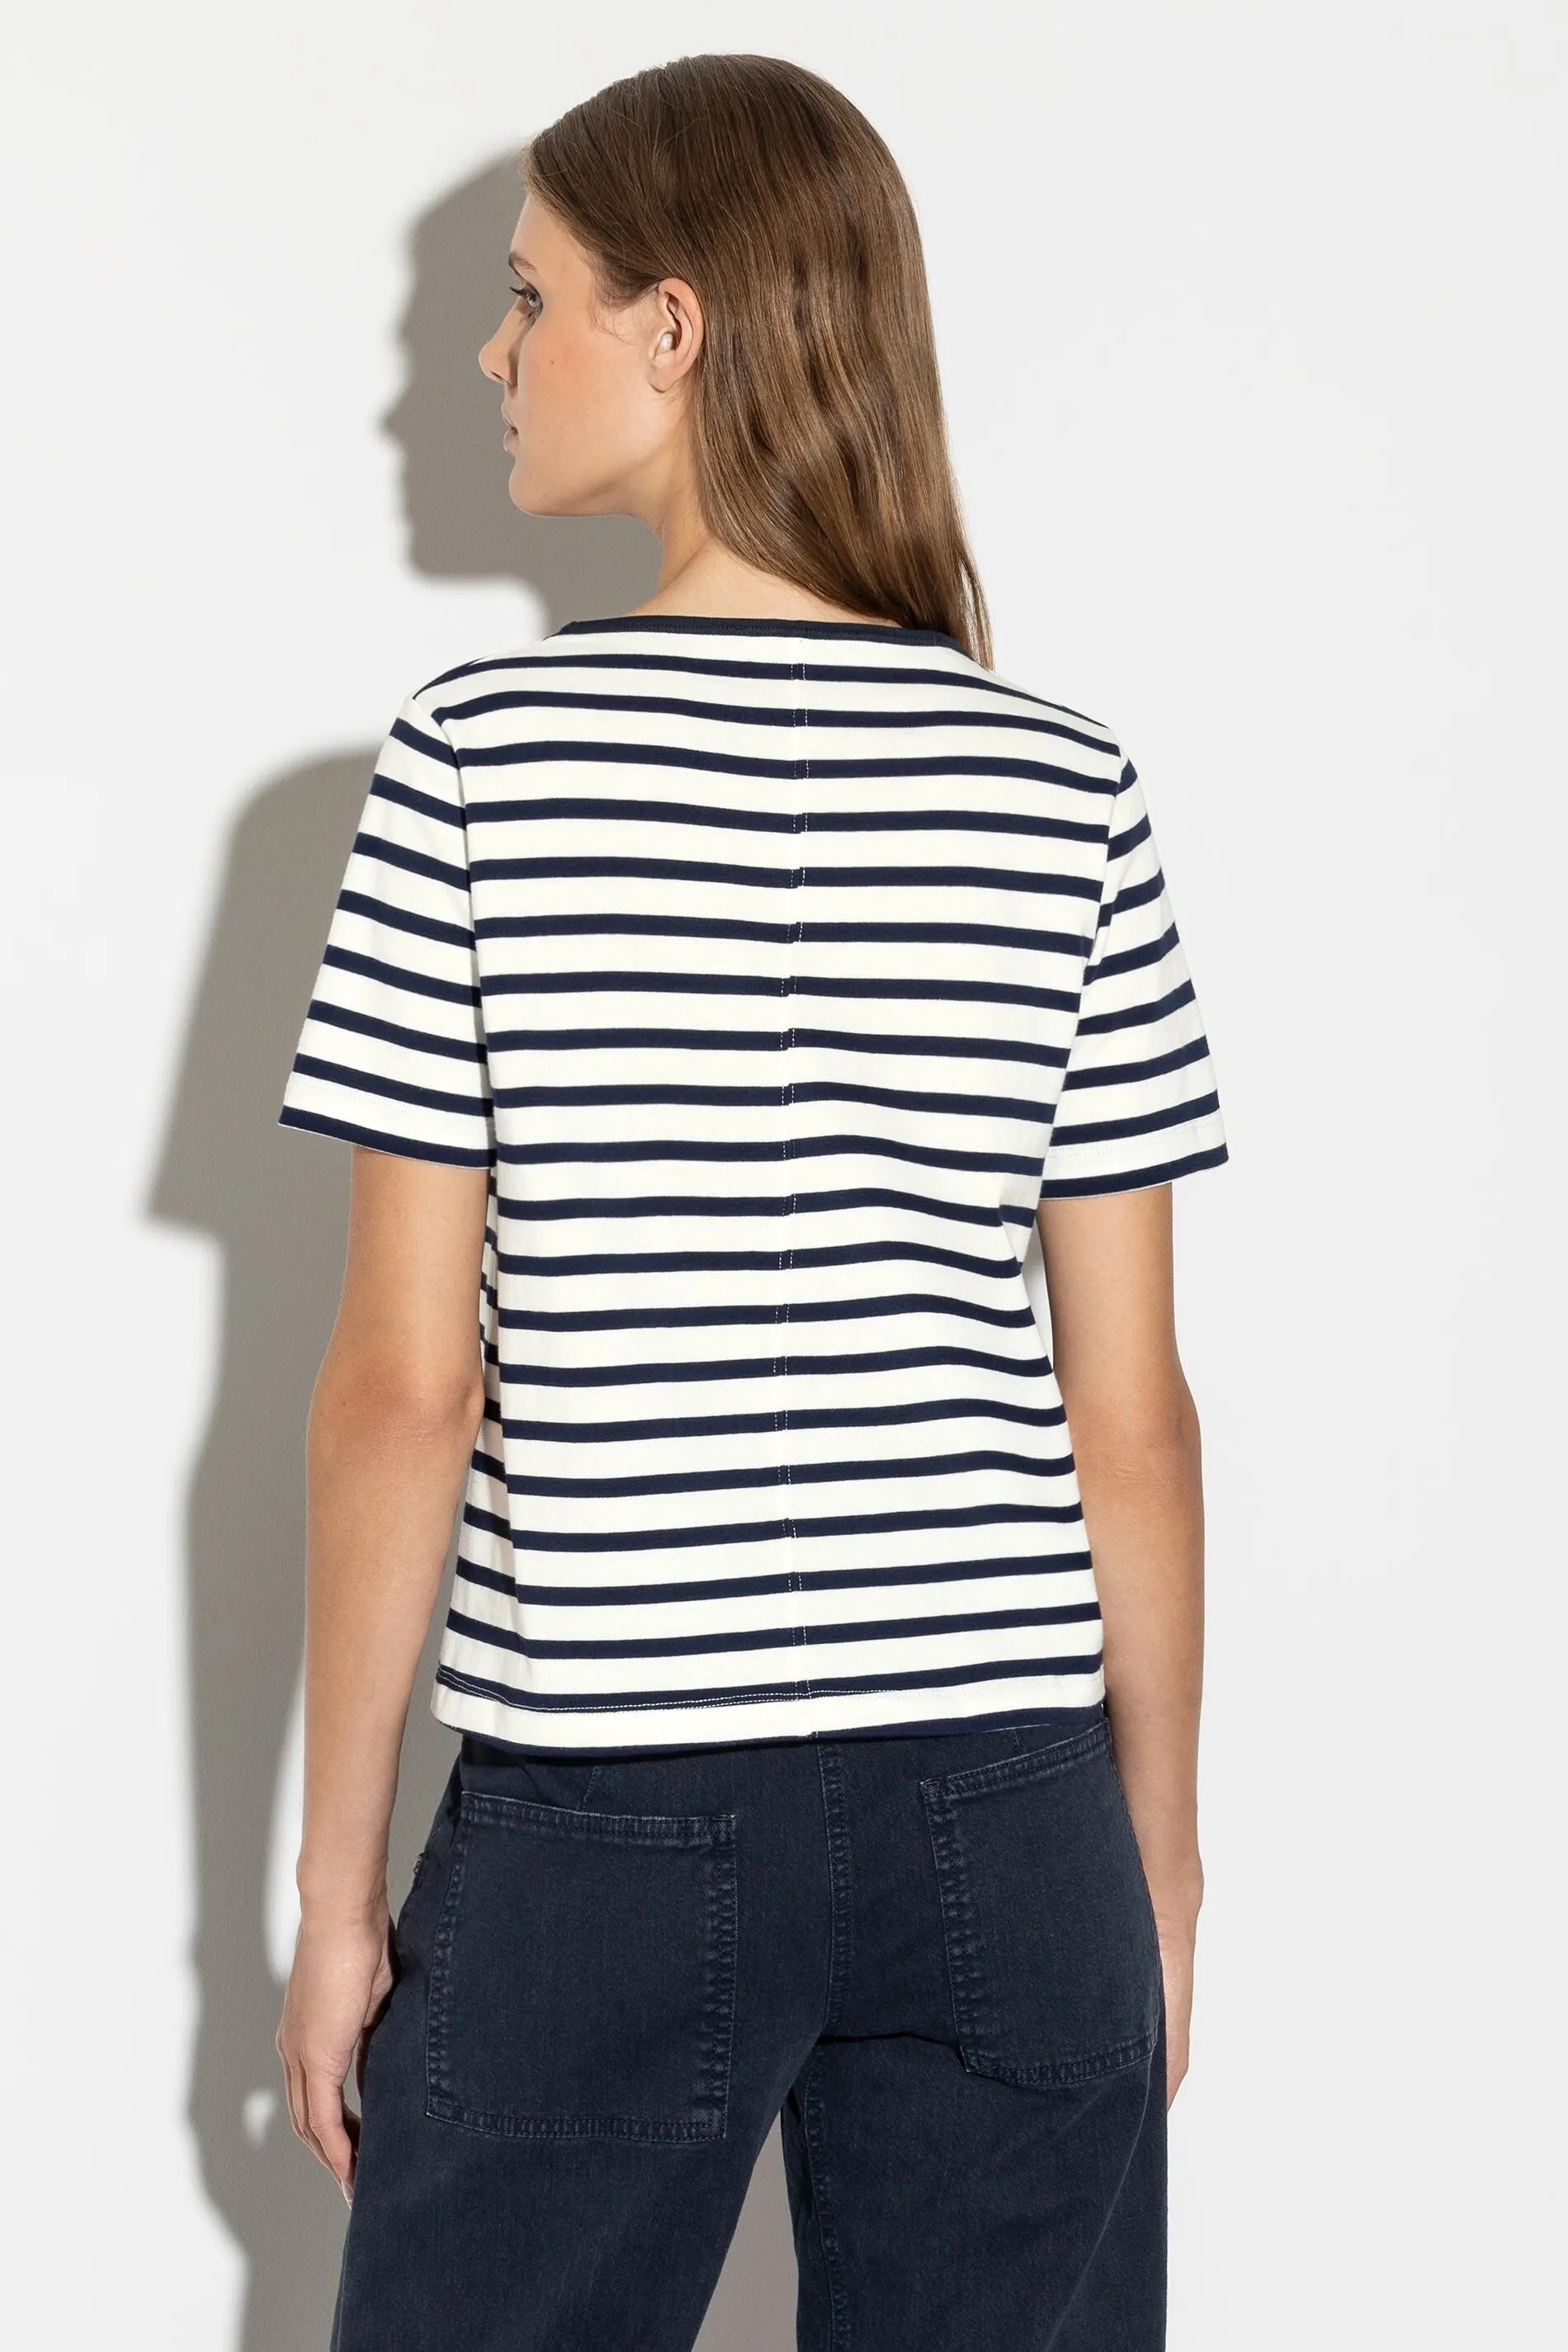 Off White & Navy Striped T-Shirt